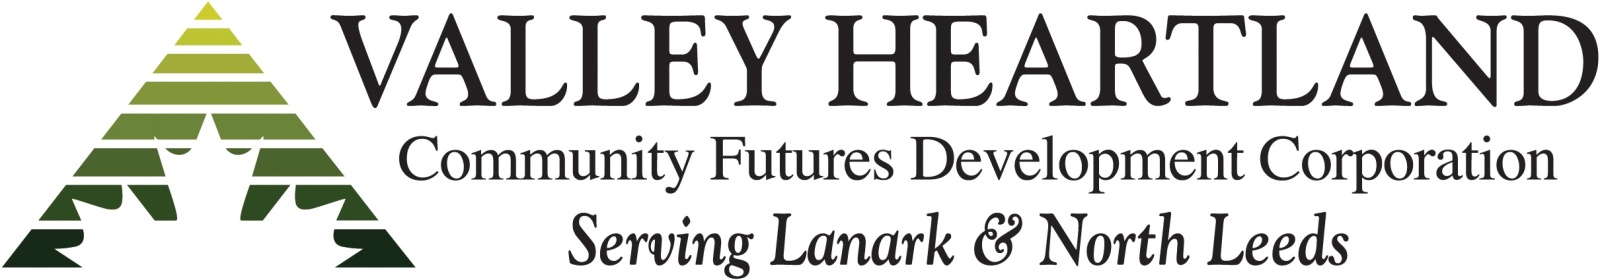 Valley Heartland Community Futures Development Corporation